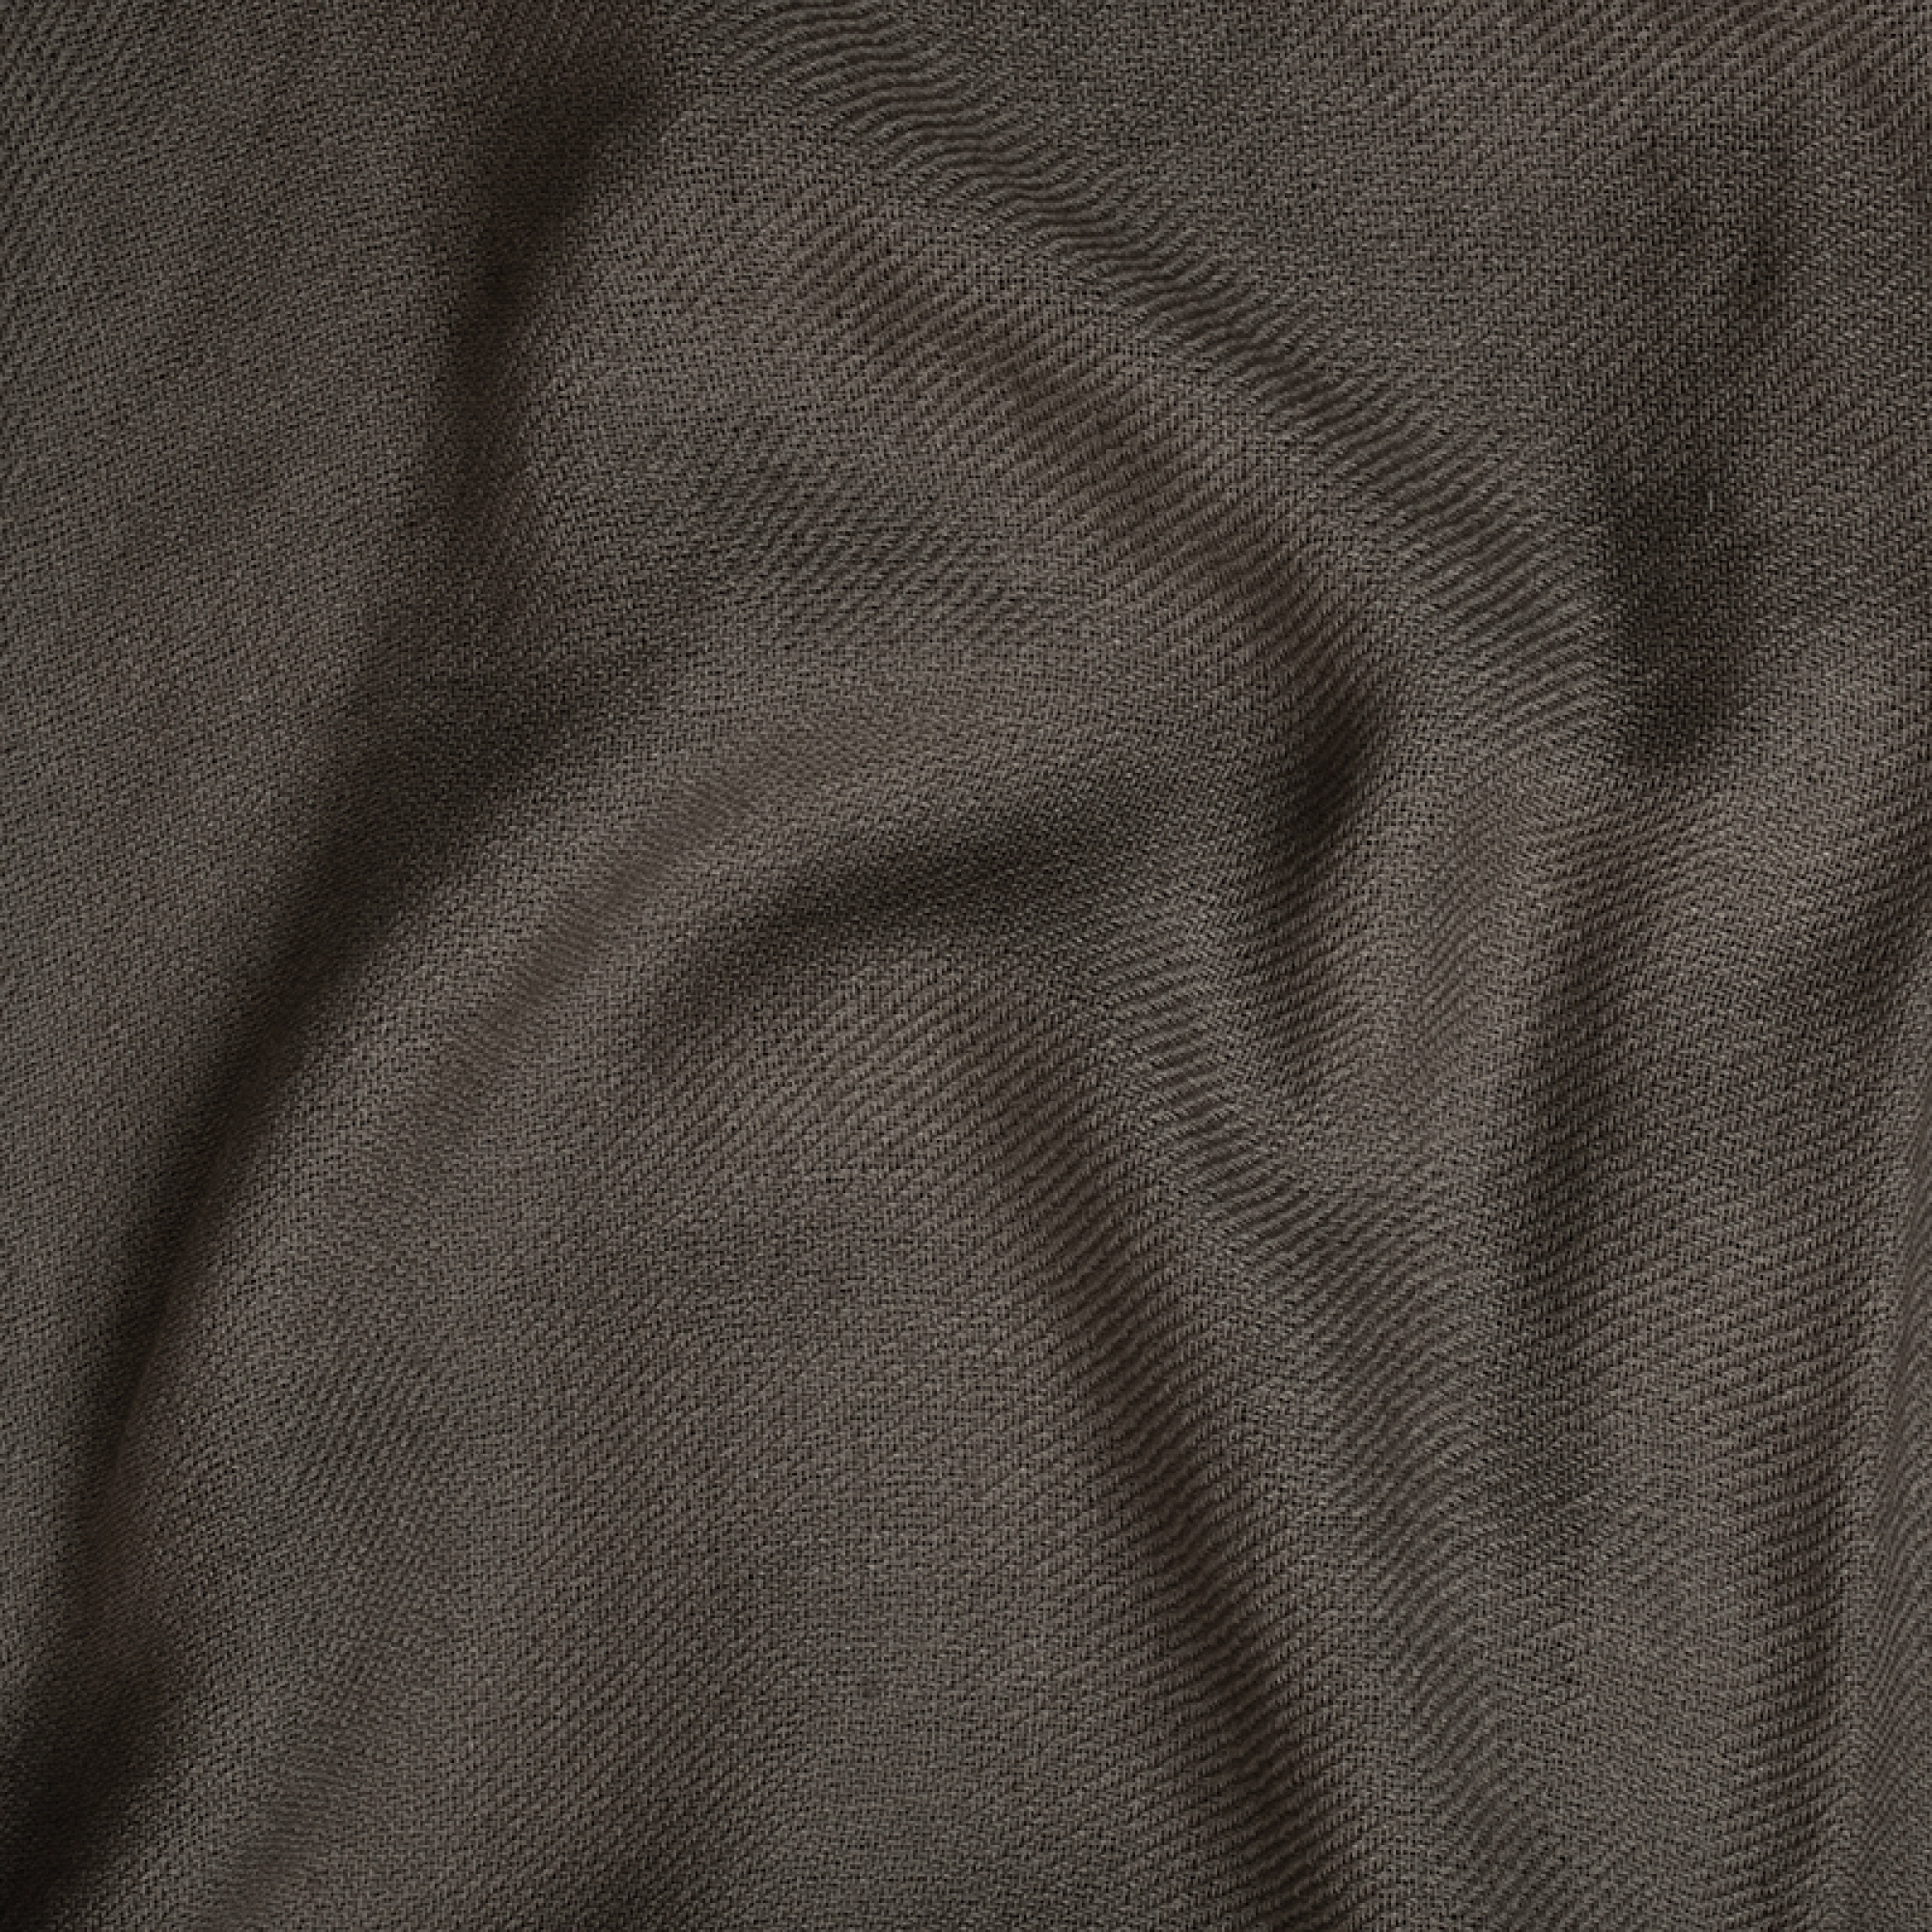 Cashmere accessories blanket toodoo plain m 180 x 220 chestnut 180 x 220 cm